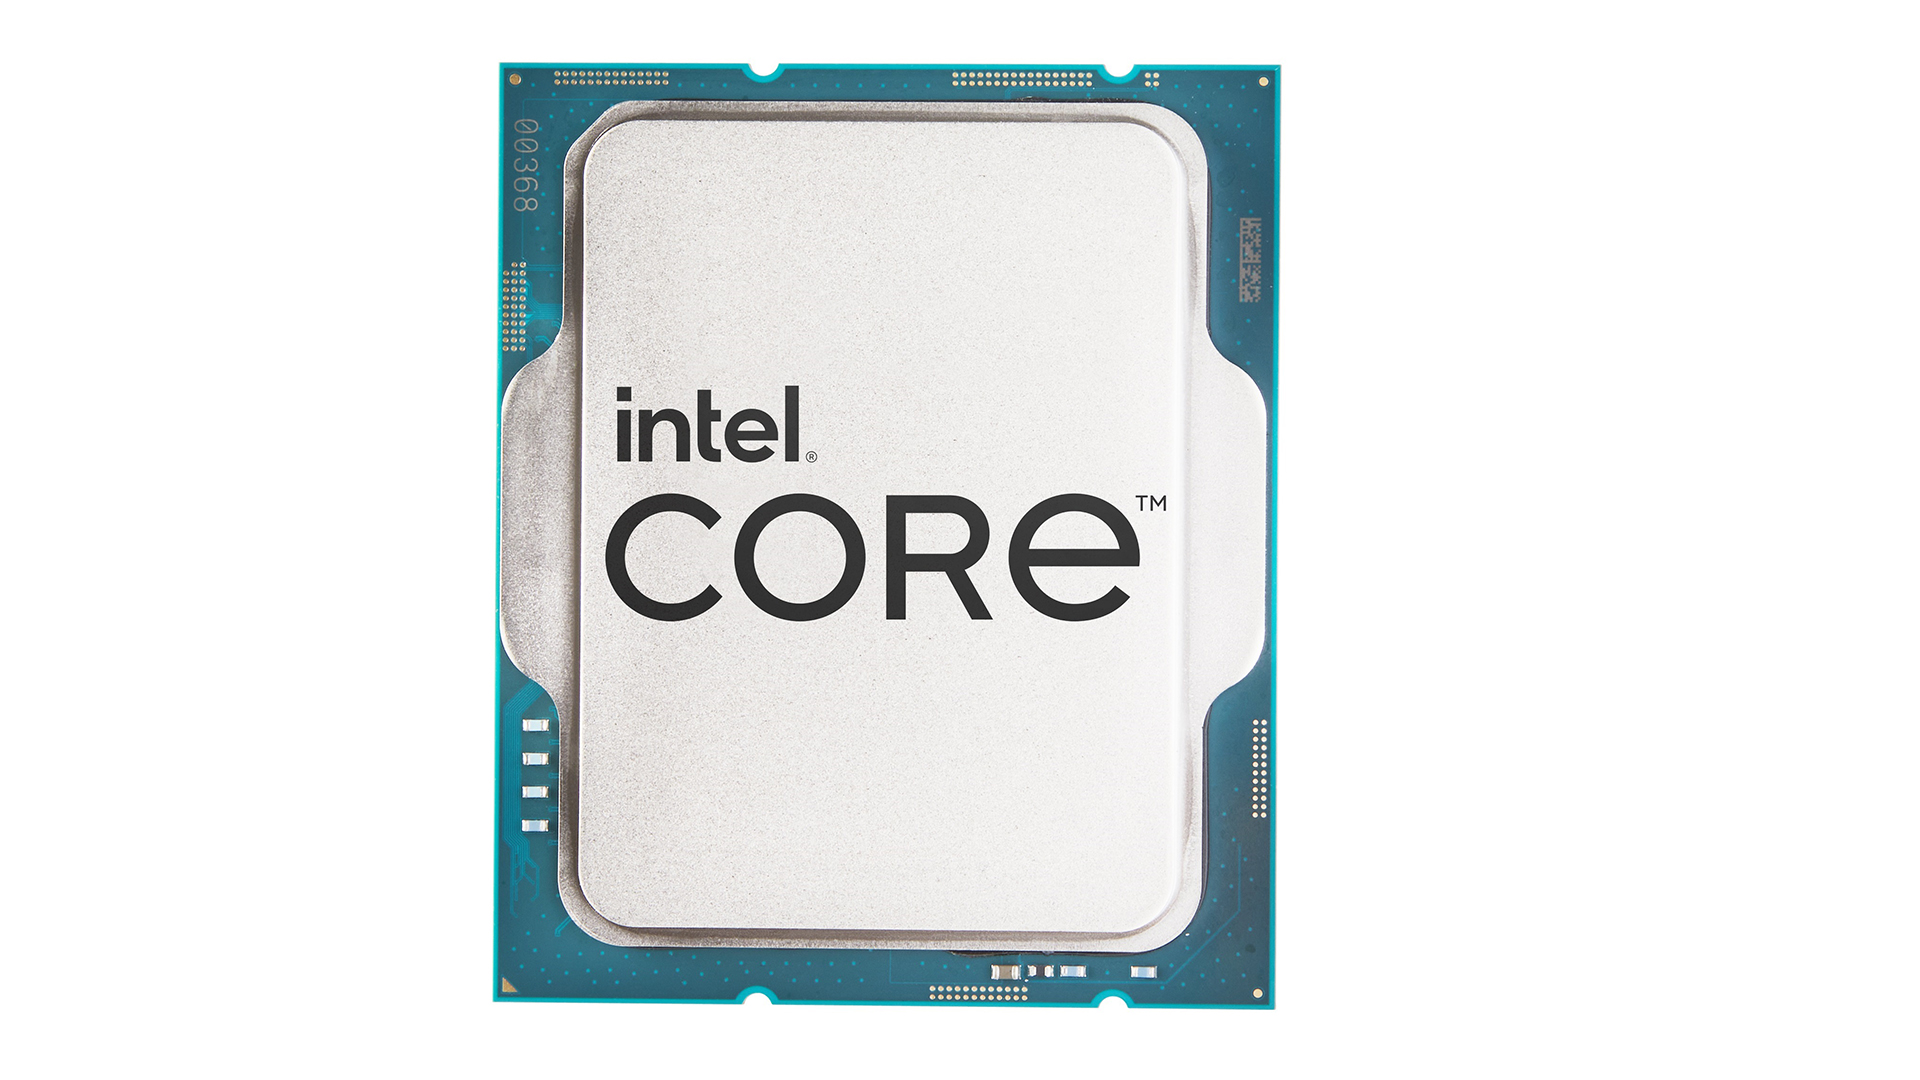 Does Intel use SoC?